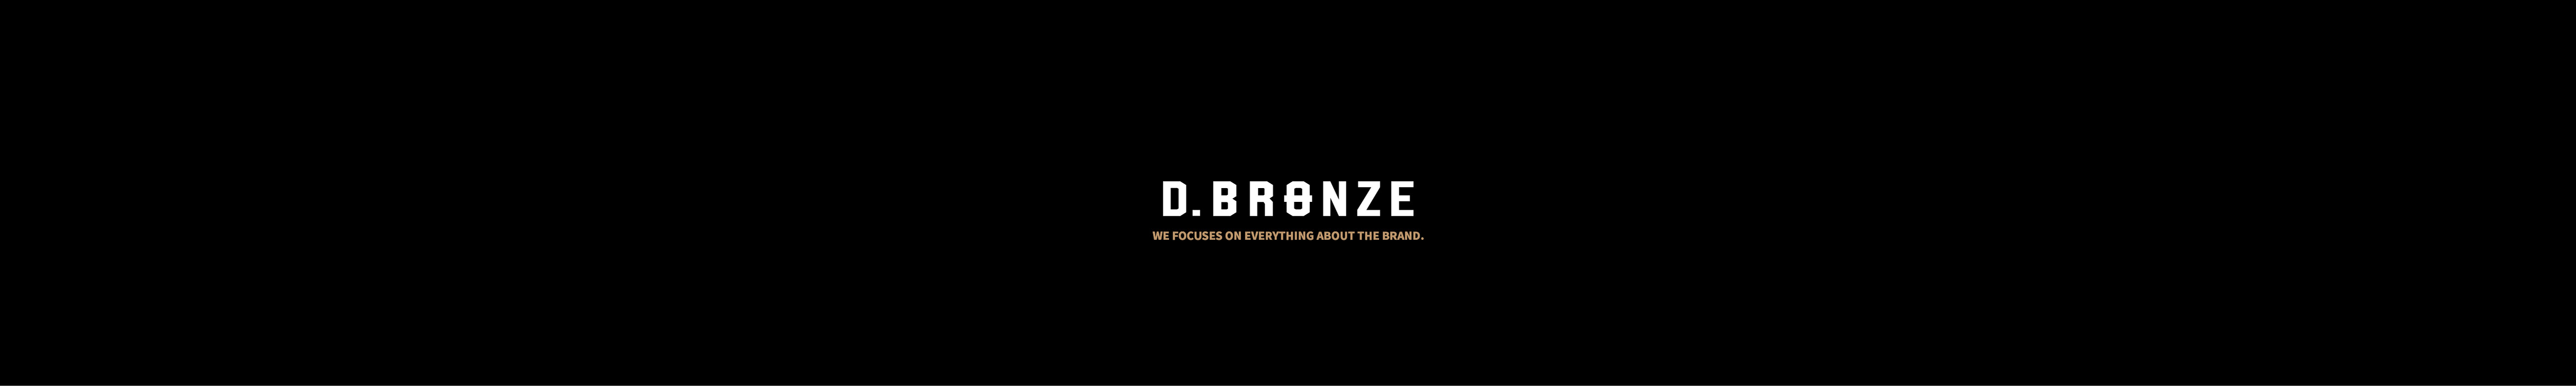 D. BRONZE's profile banner